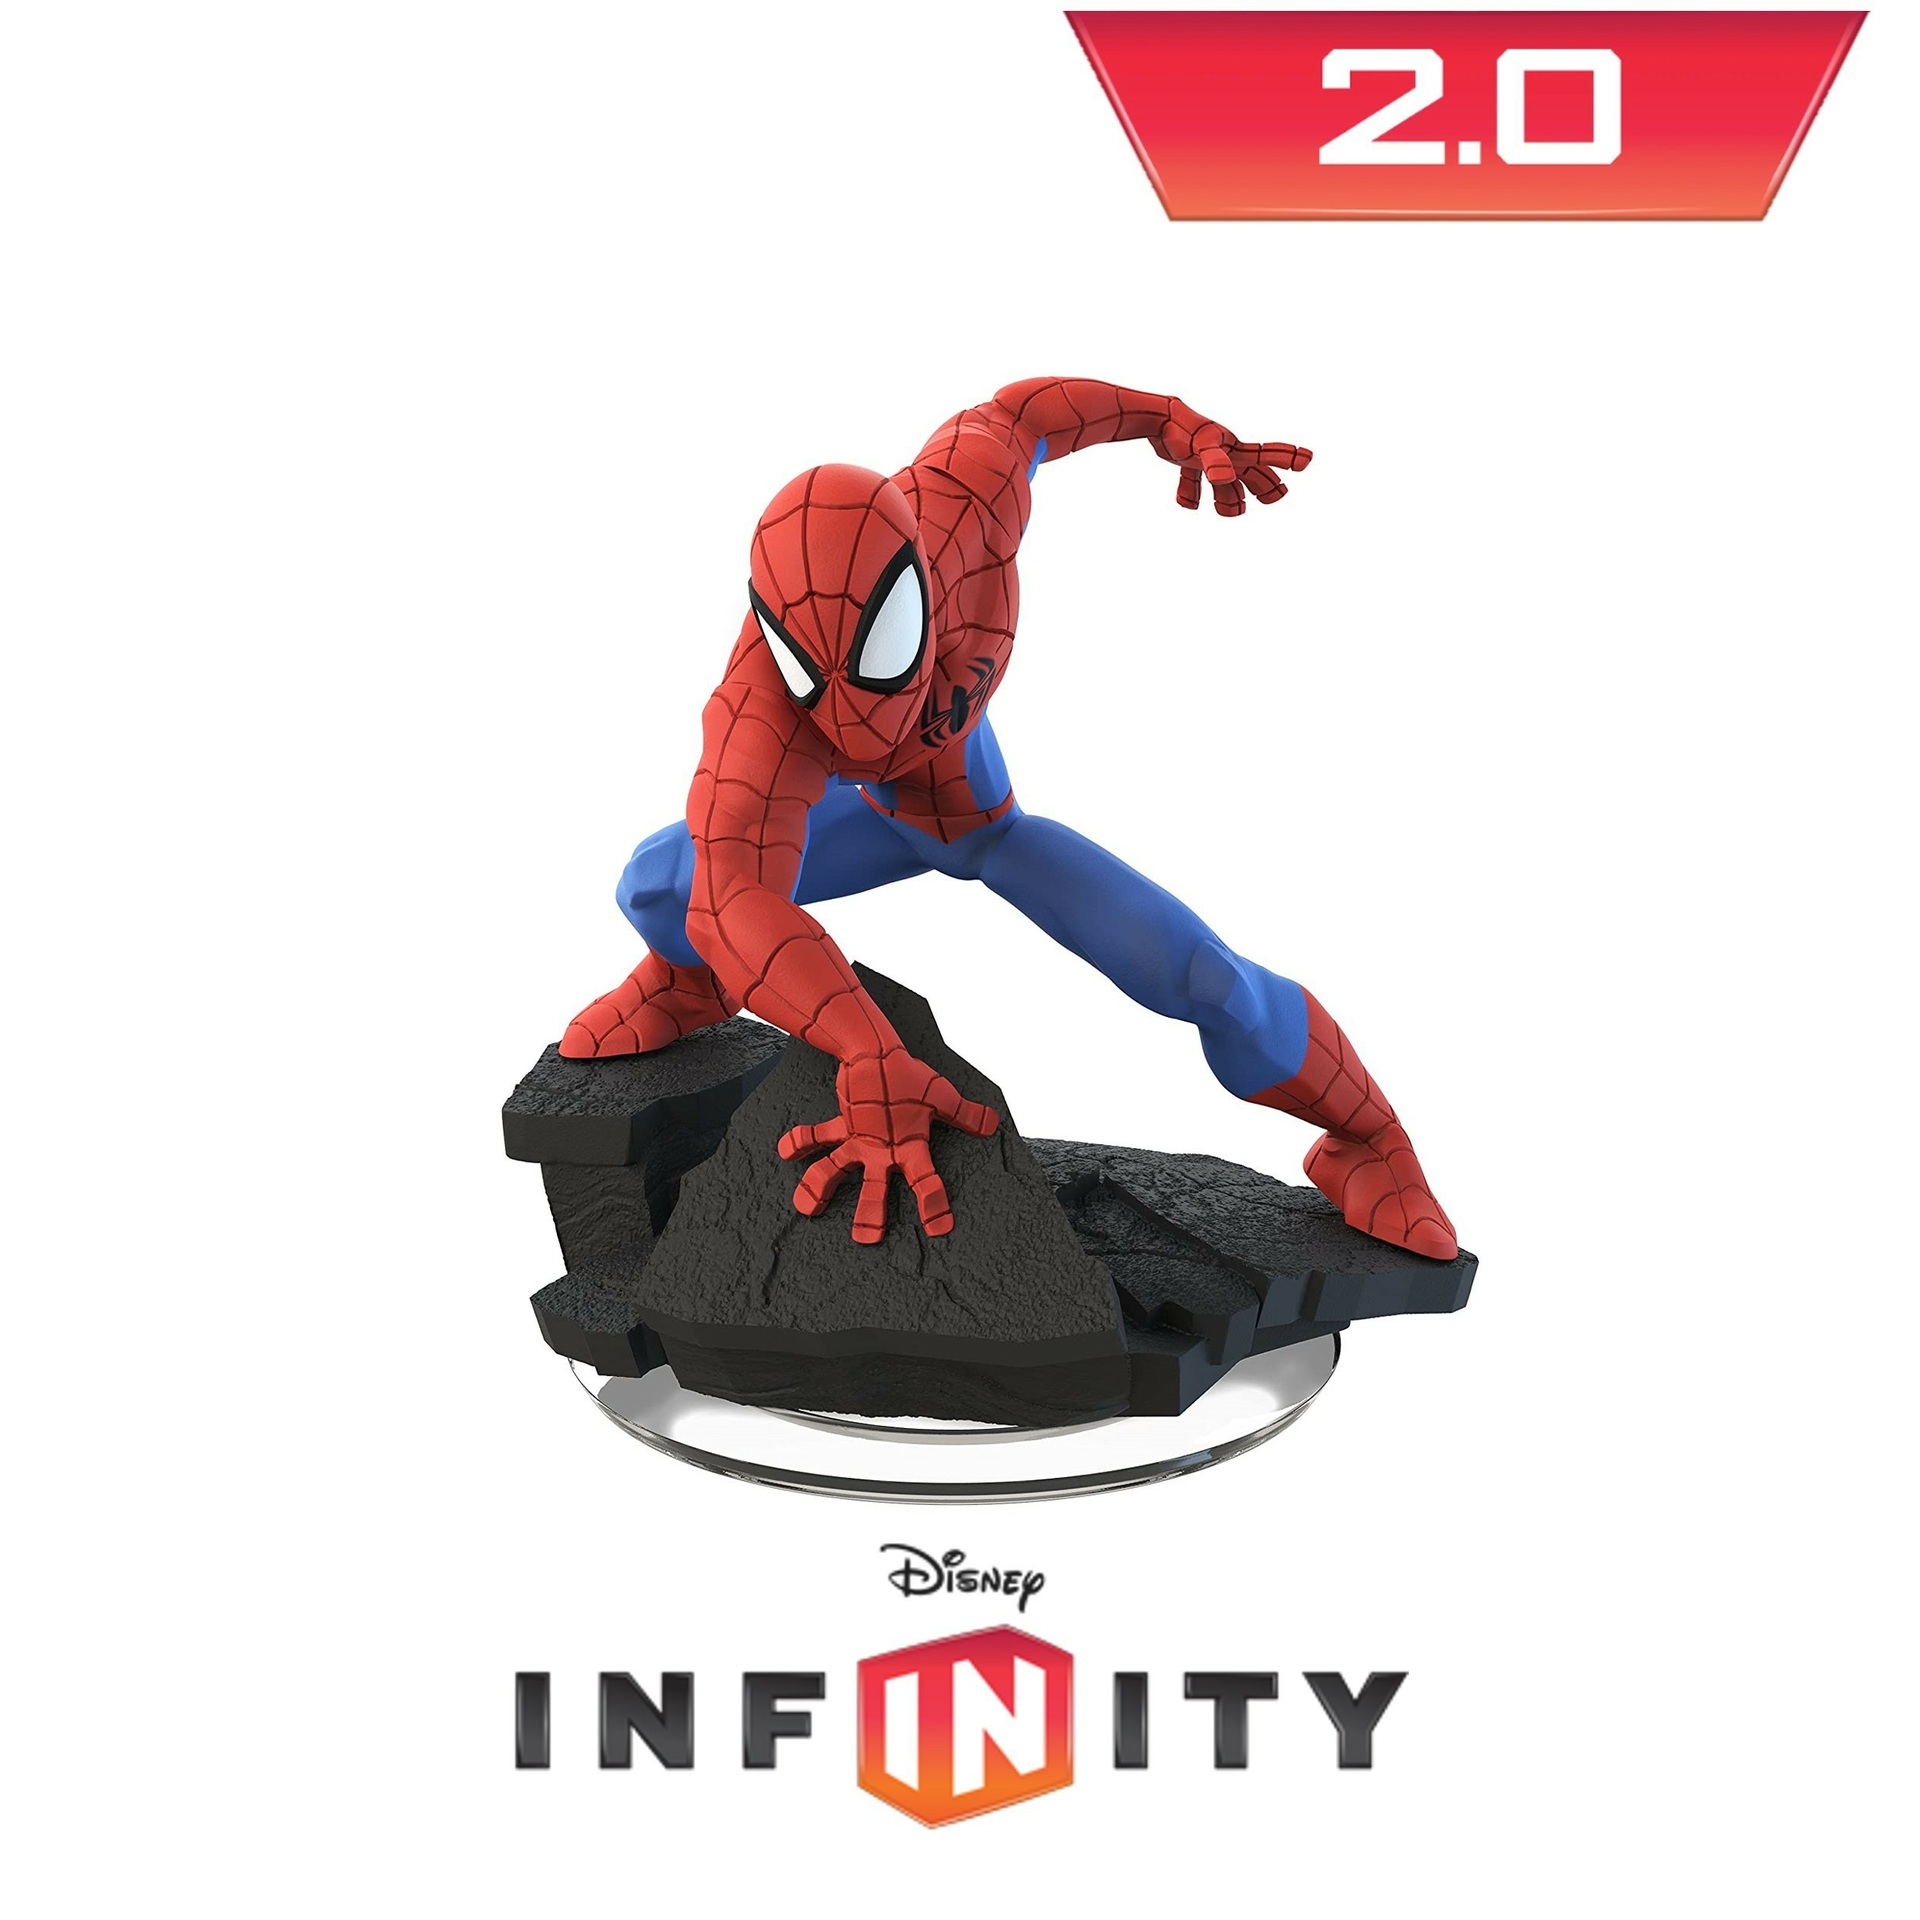 Disney Infinity - Spider-Man - Playstation 3 Hardware